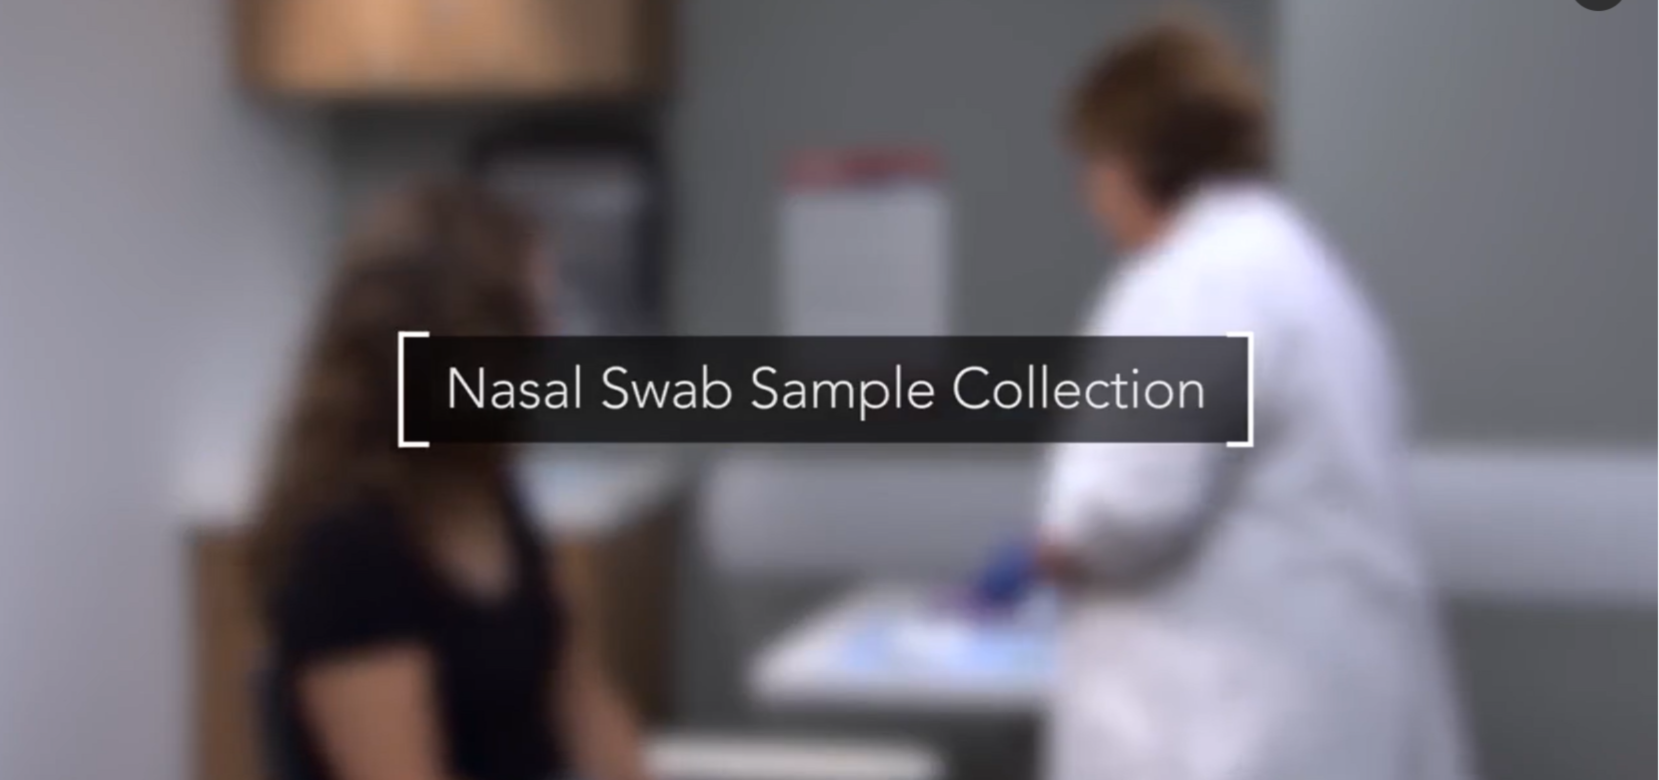 Nasal swab sample collection icon